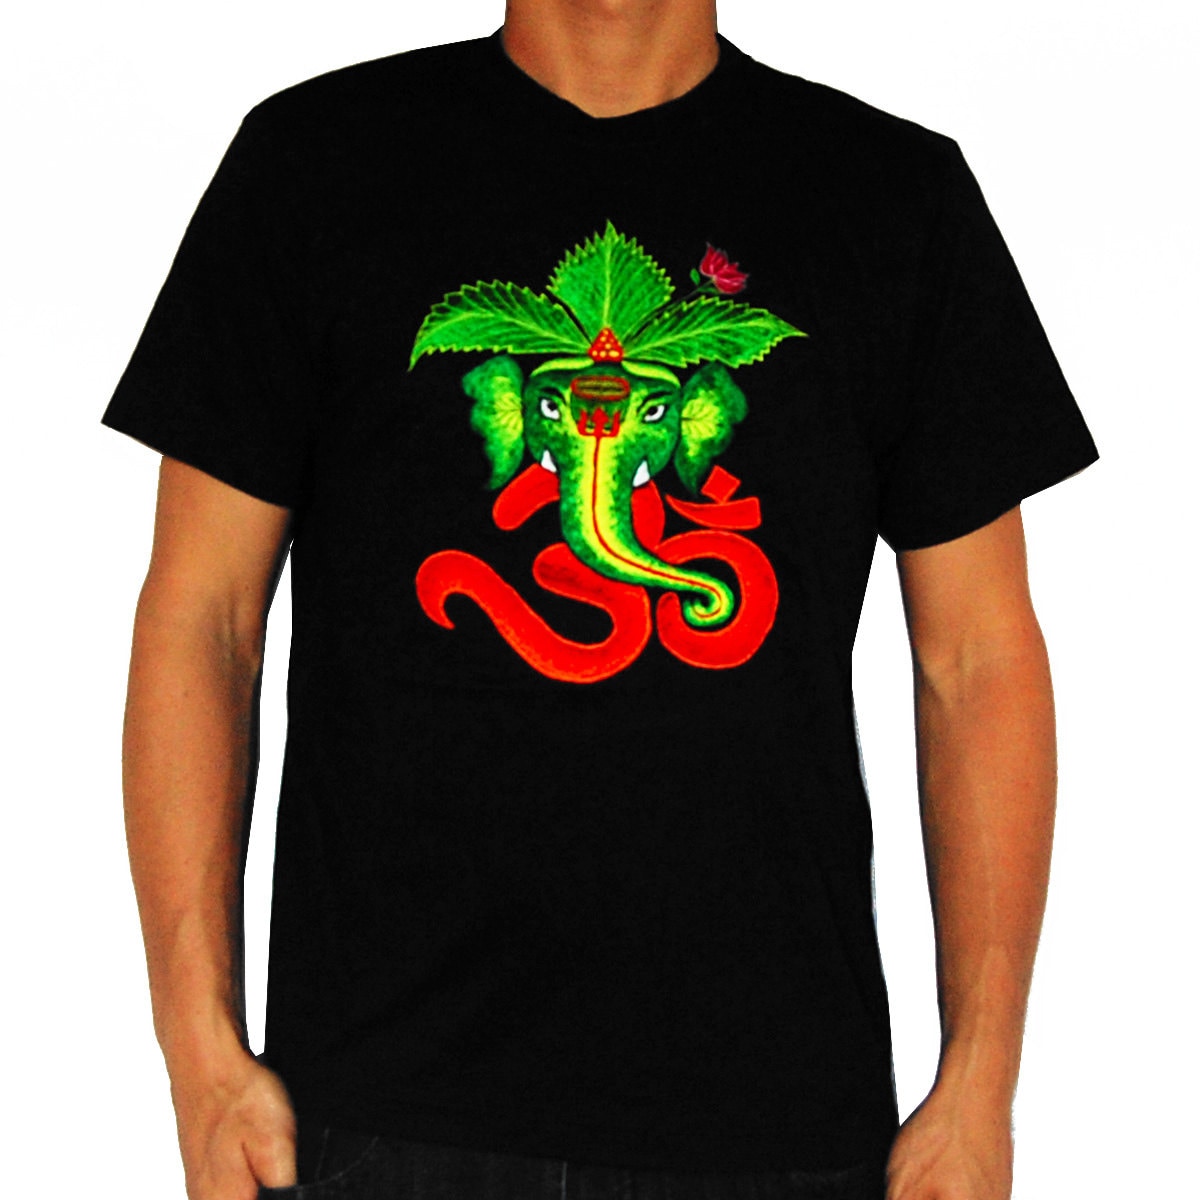 AUM Ganesha T-Shirt blacklight handmade embroidery no print psy shirt goa t-shirt